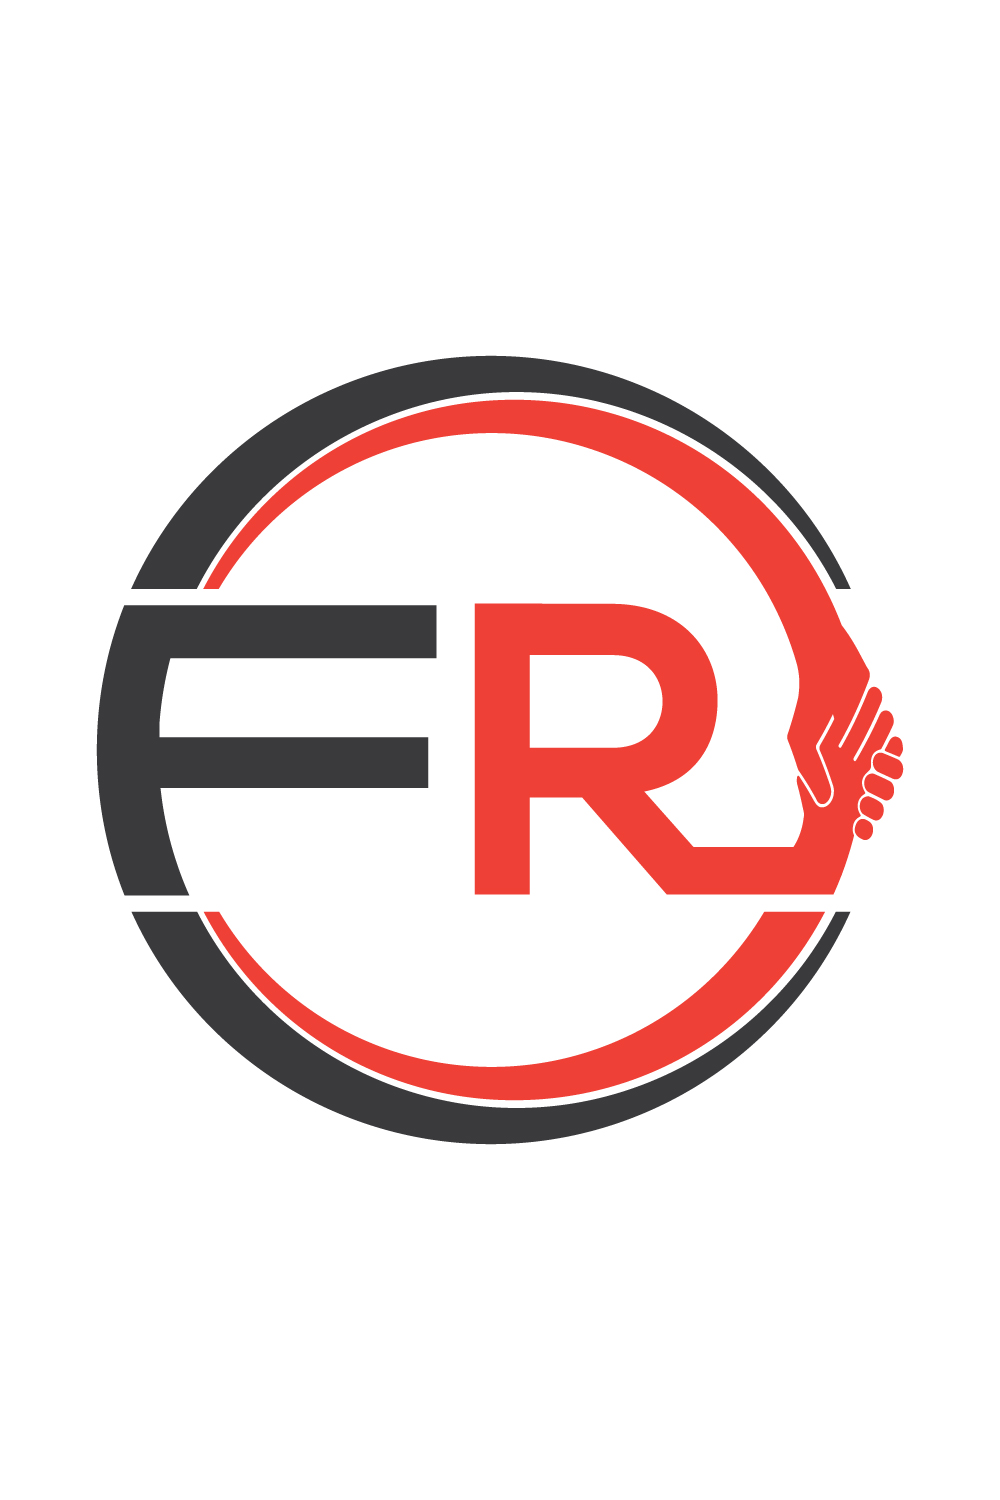 FR Construction Logo design pinterest preview image.